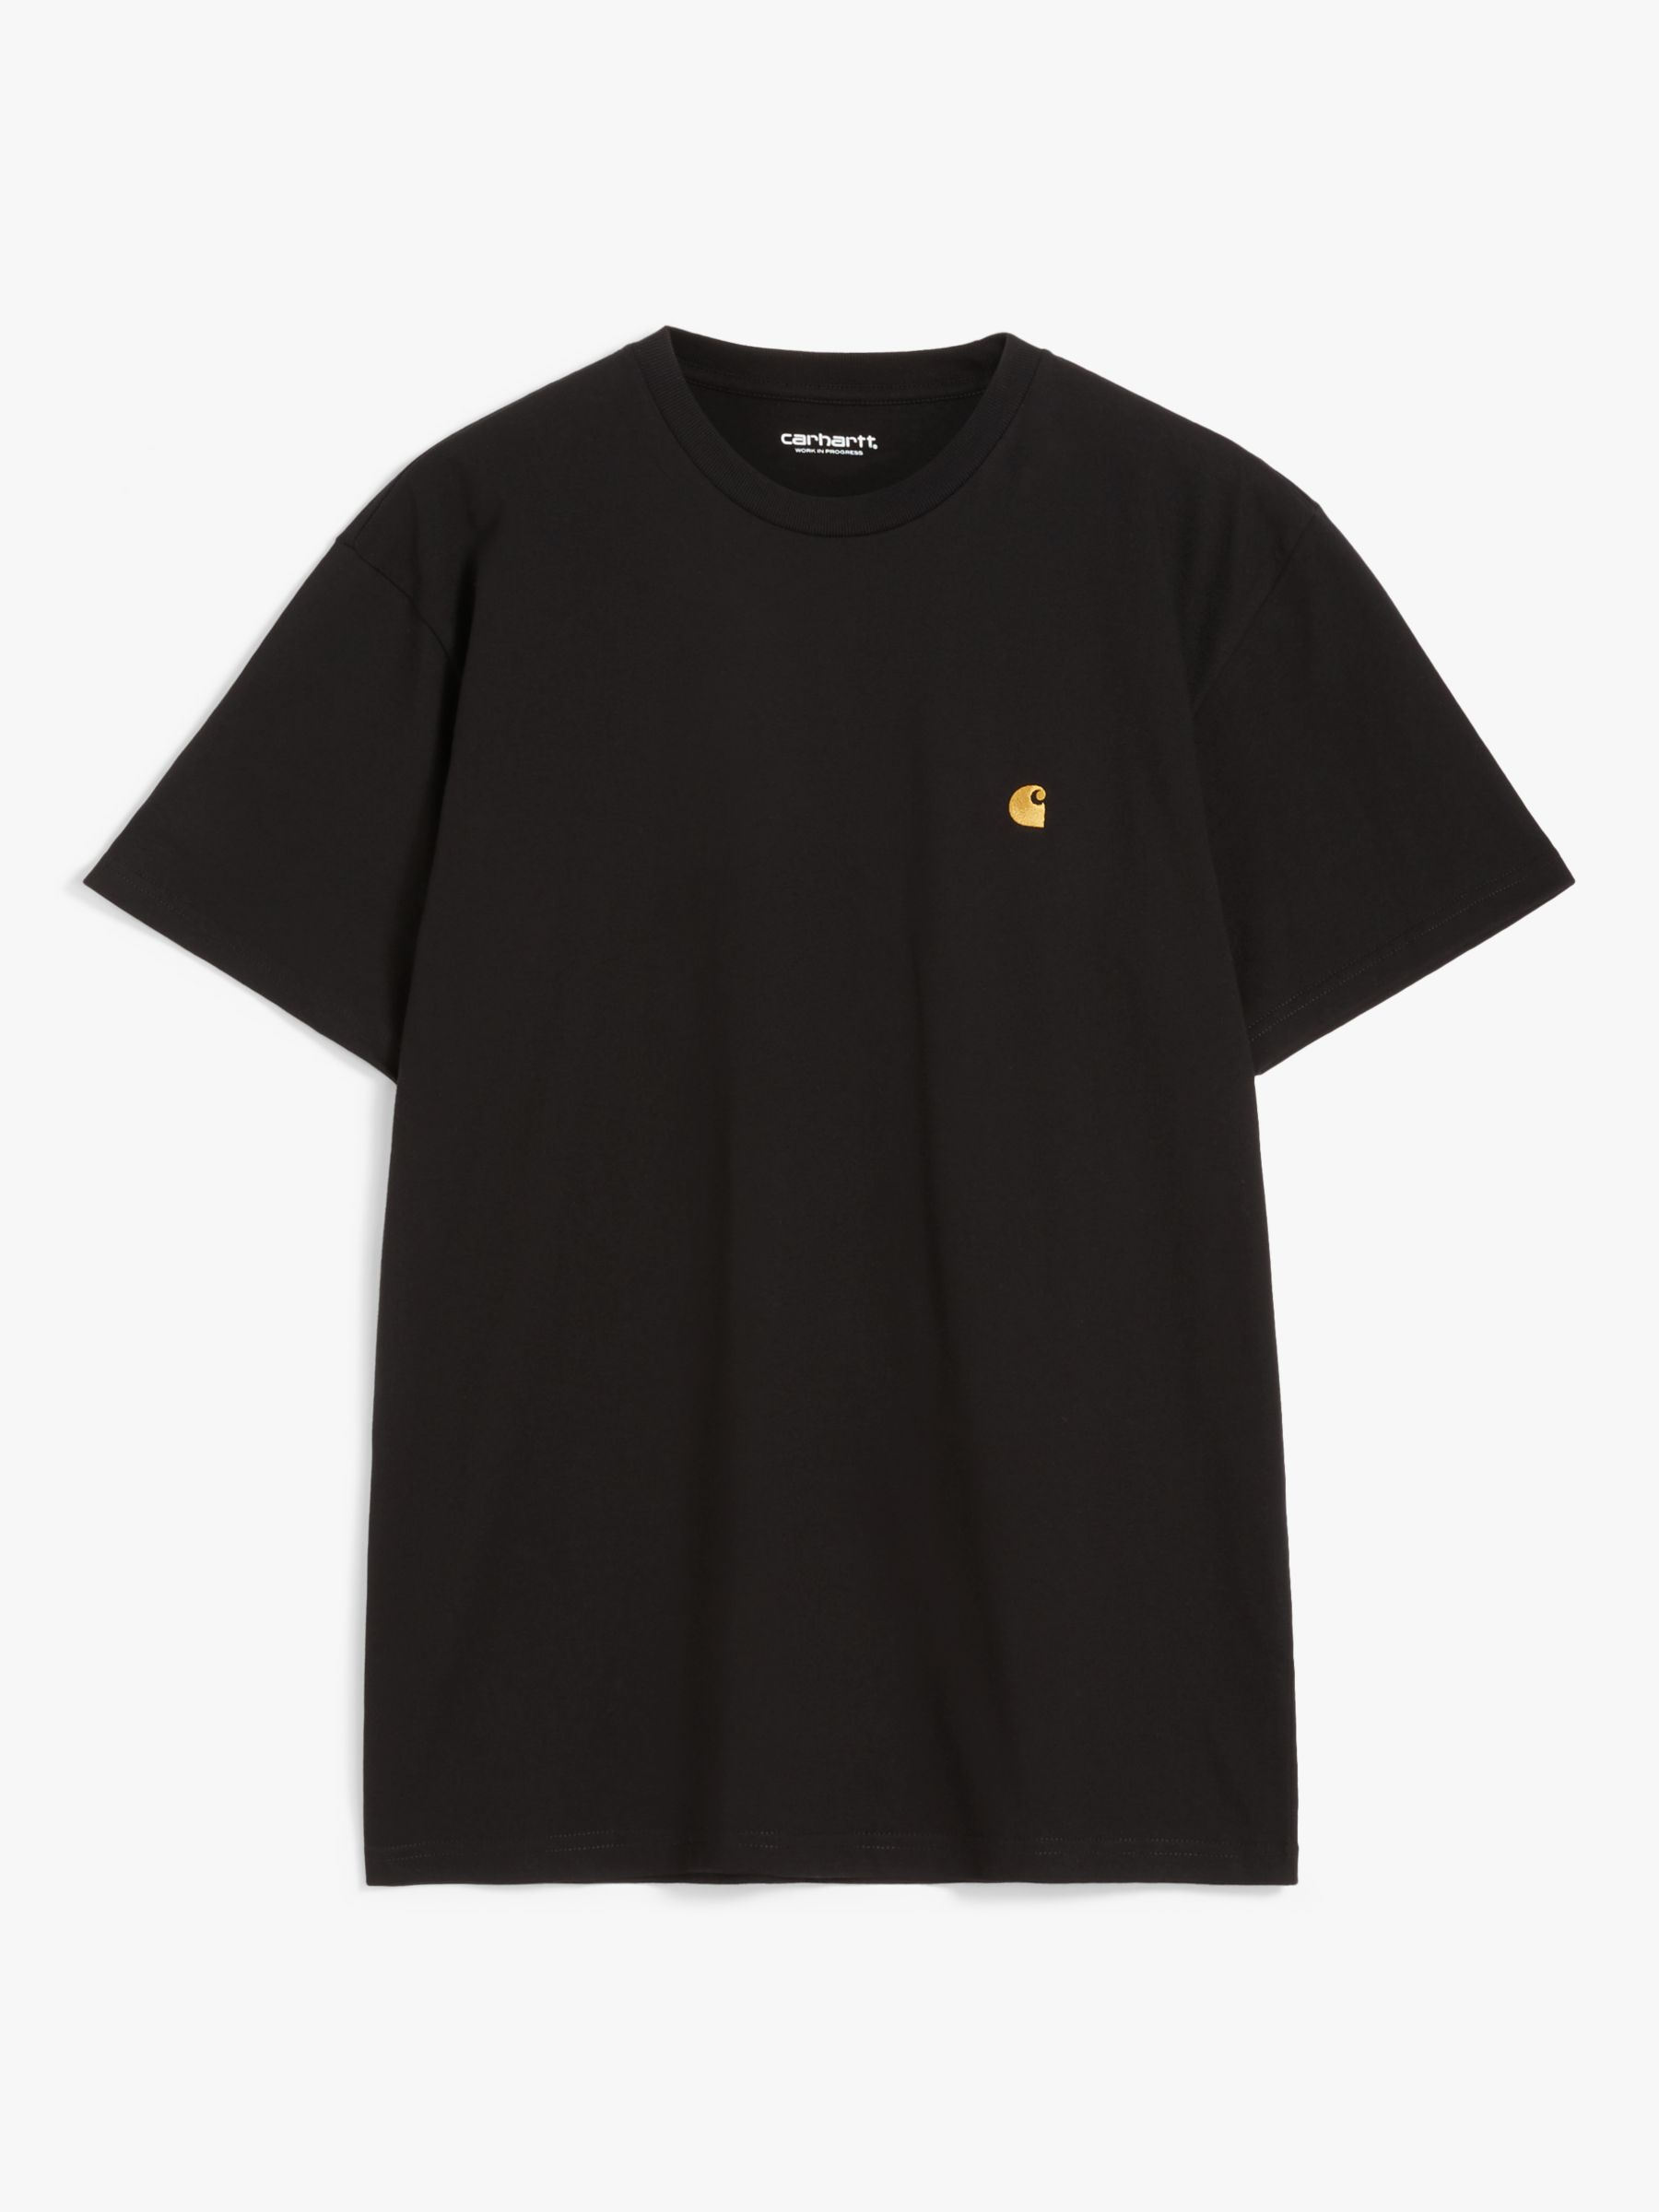 Carhartt WIP Chase Short Sleeve T-Shirt, Black, S